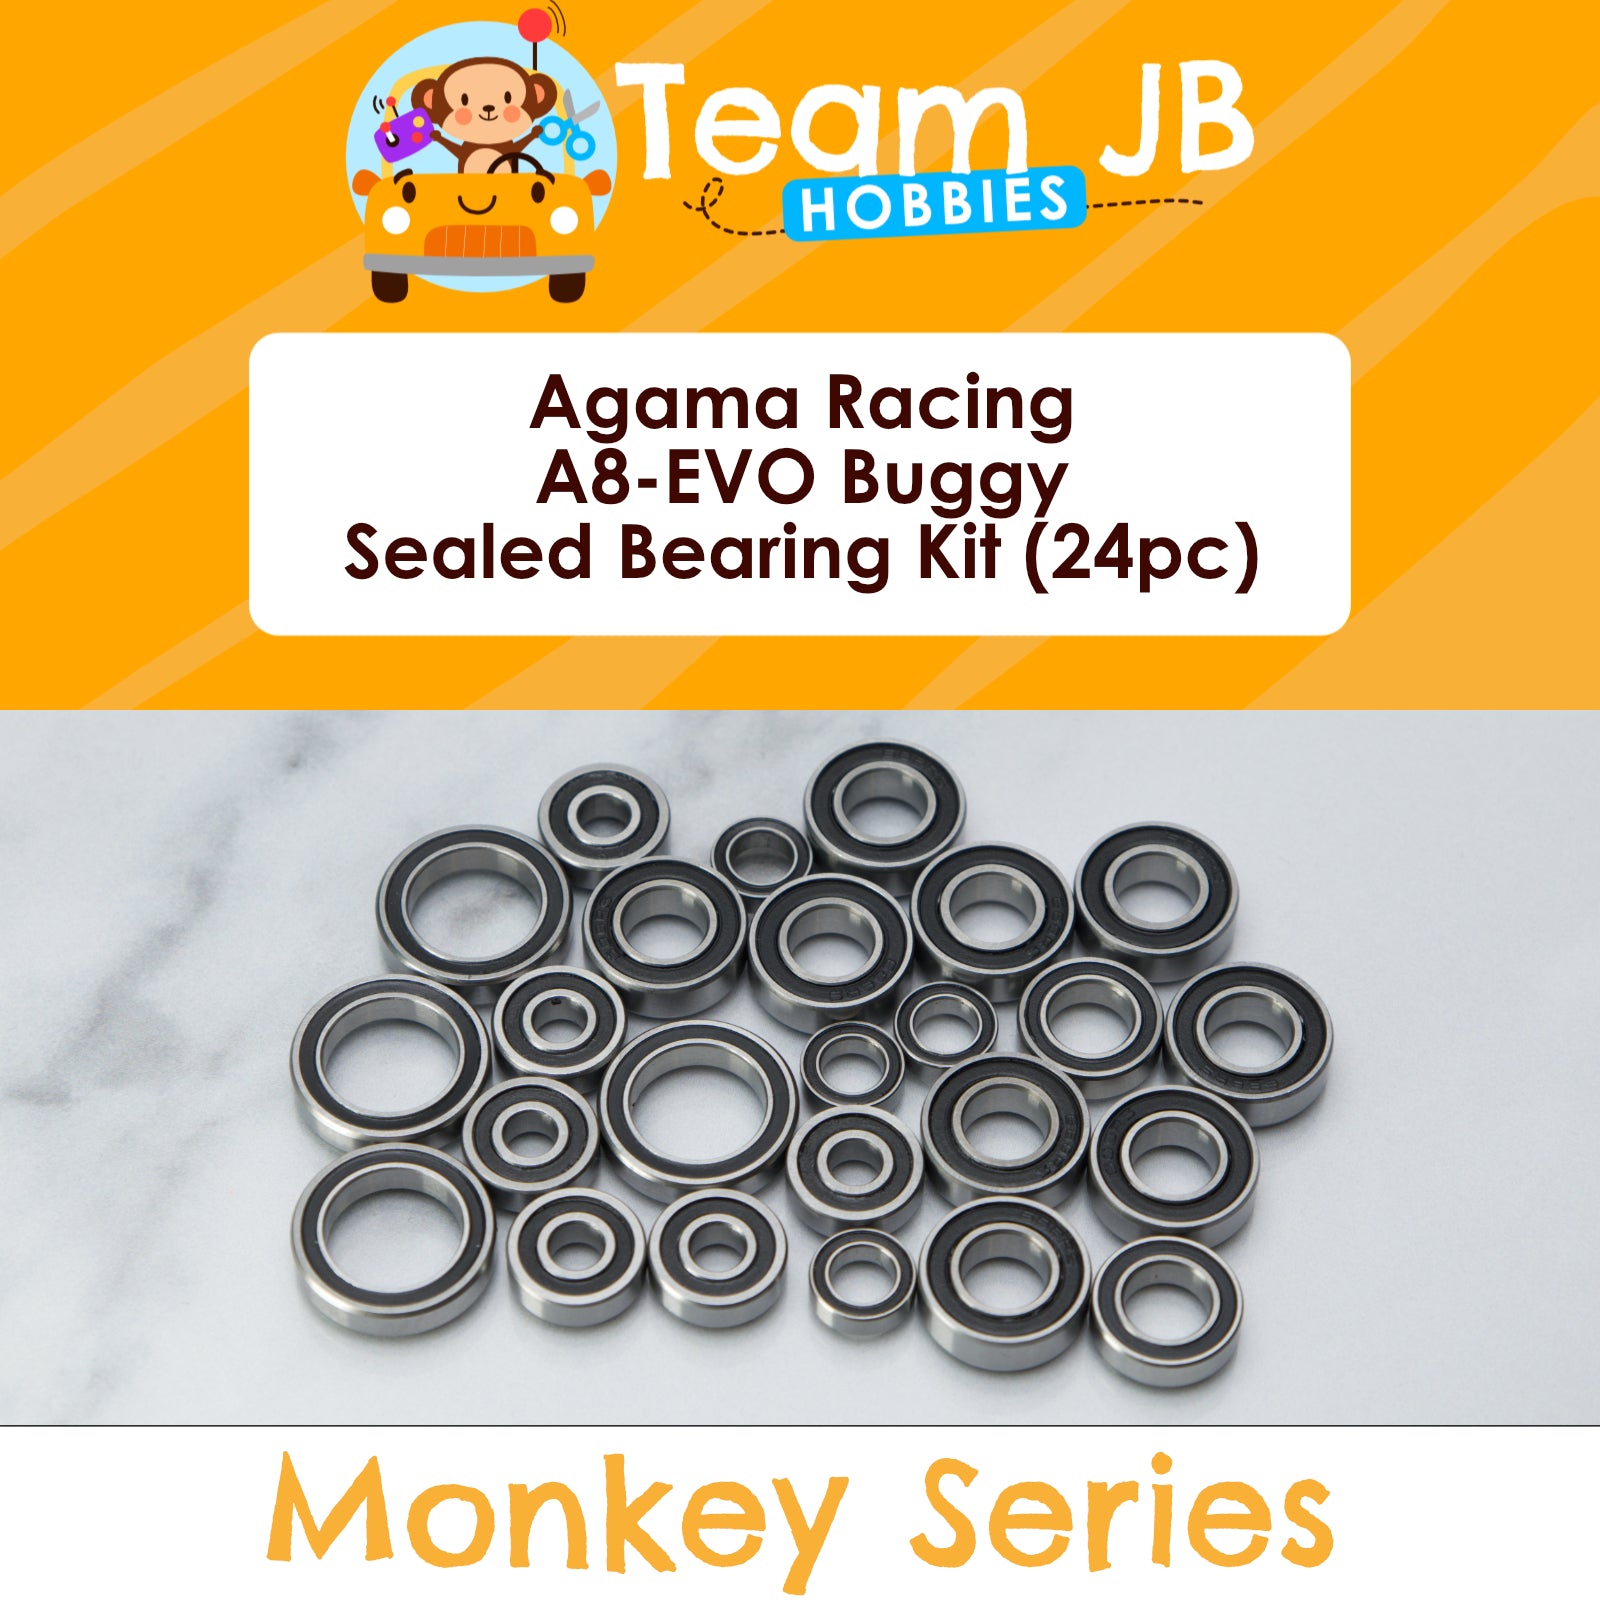 Agama Racing A8-EVO Buggy - Sealed Bearing Kit